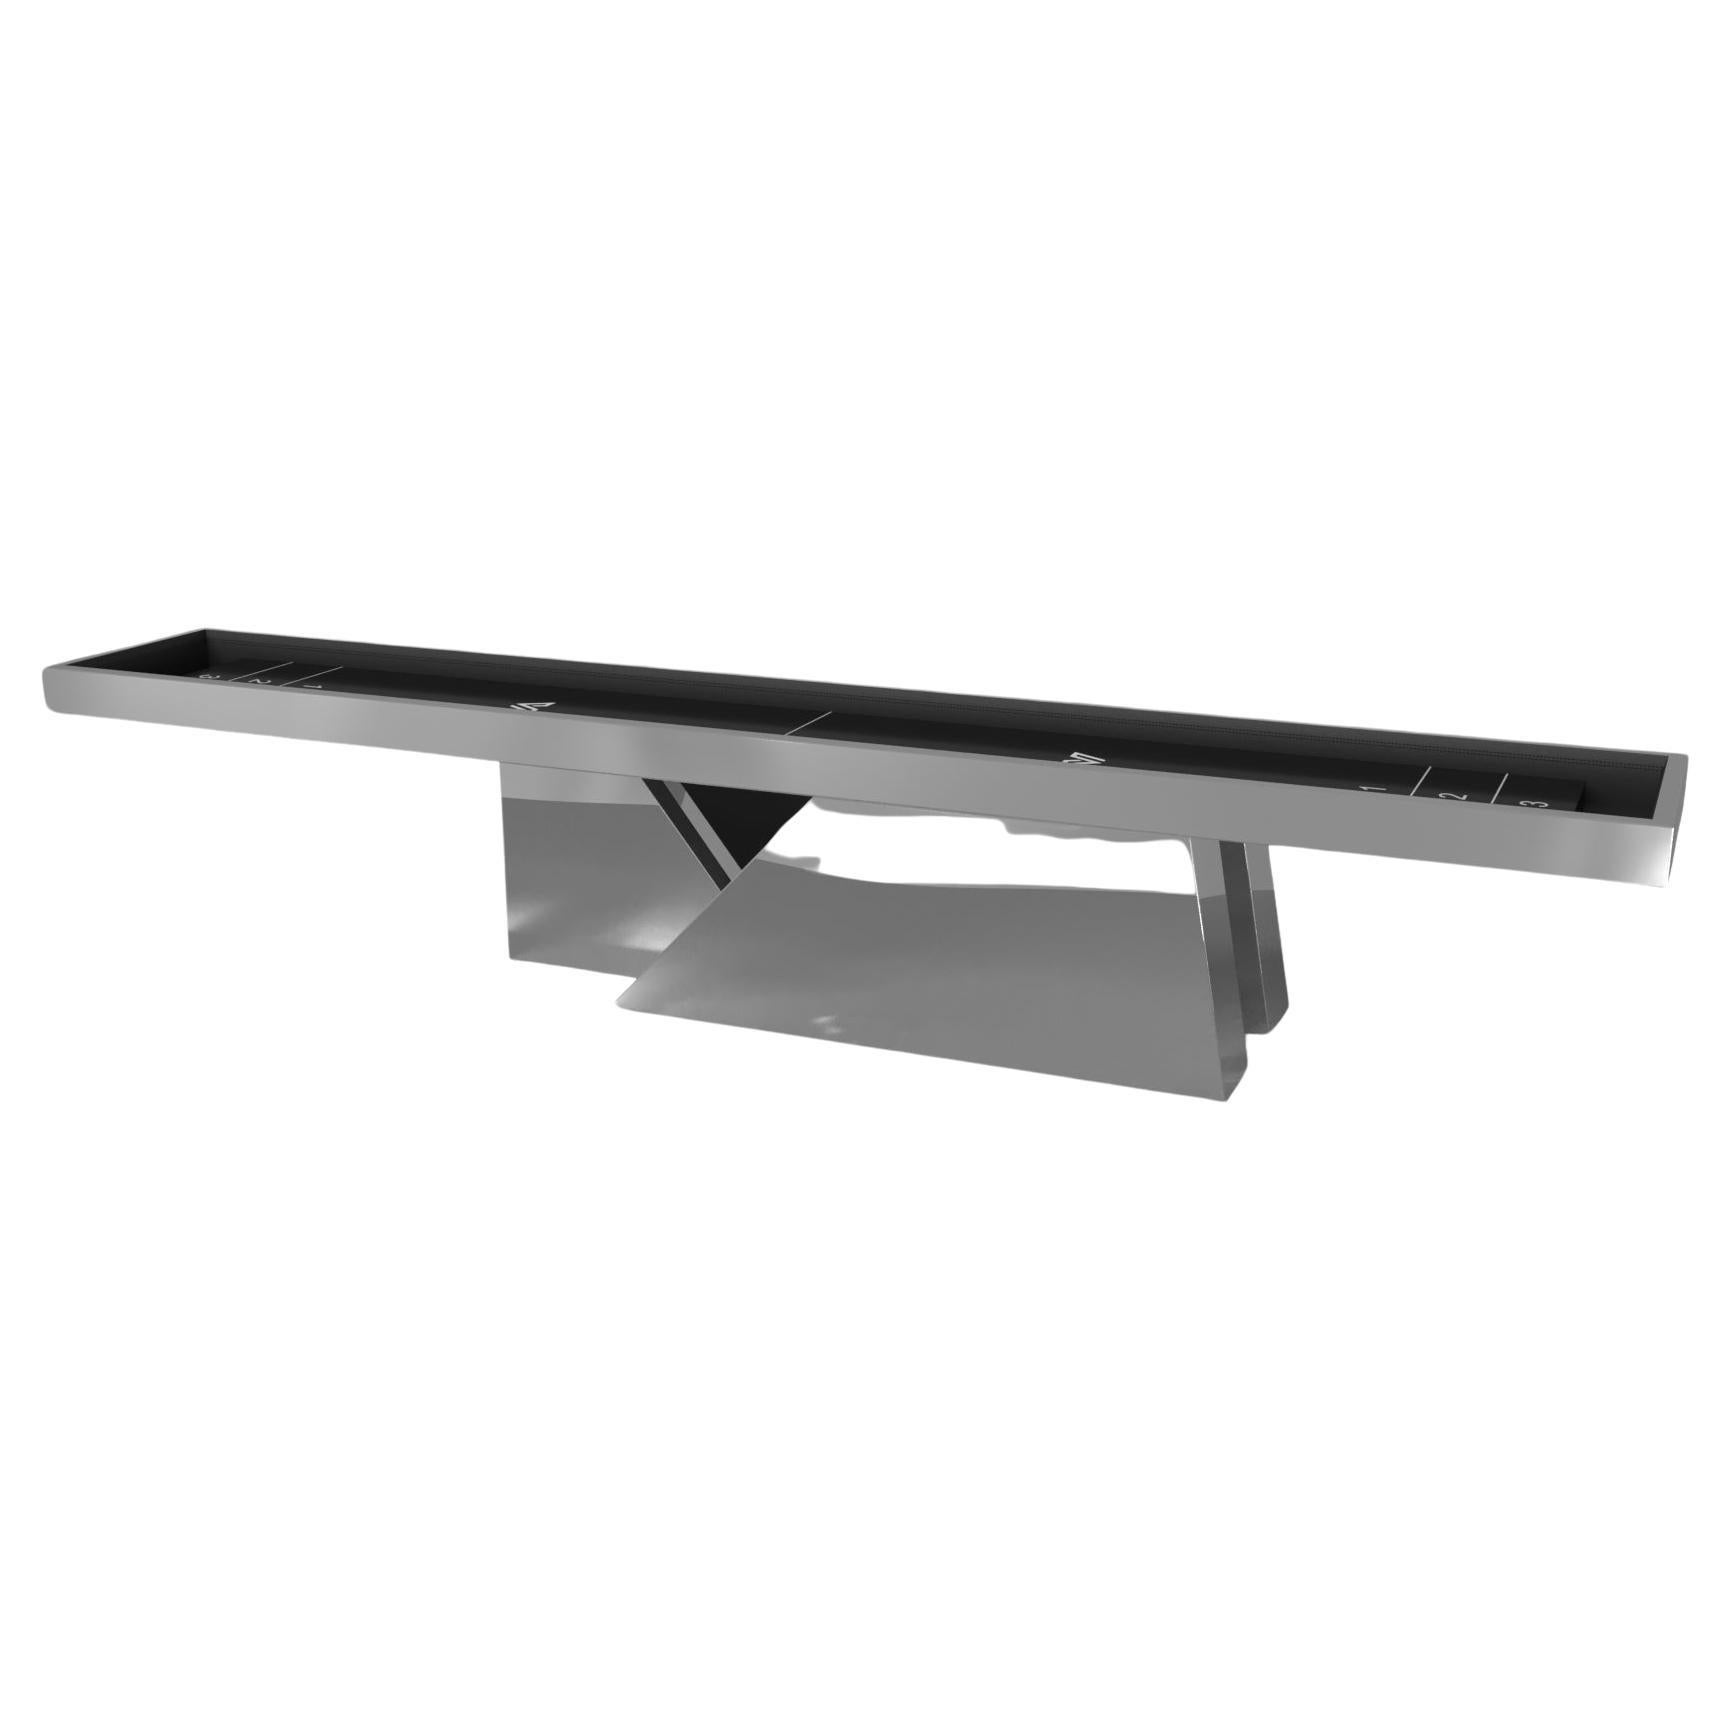 Elevate Customs Stilt Shuffleboard Tables/Stainless Steel Sheet Metal in 12'-USA For Sale